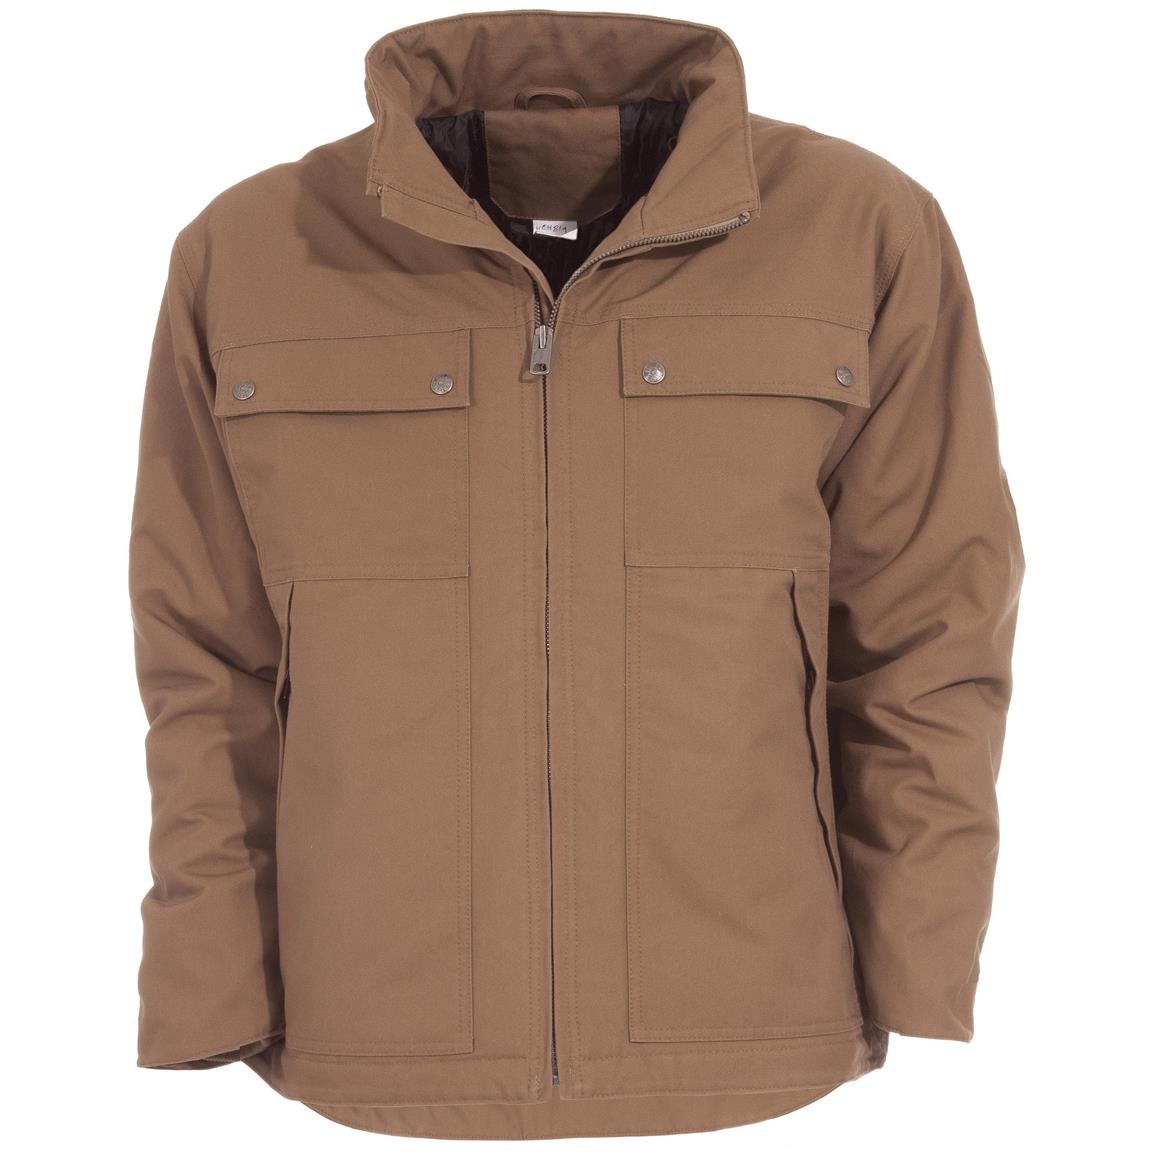 Berne® Adler Coat - 621553, Insulated Jackets & Coats at Sportsman's Guide